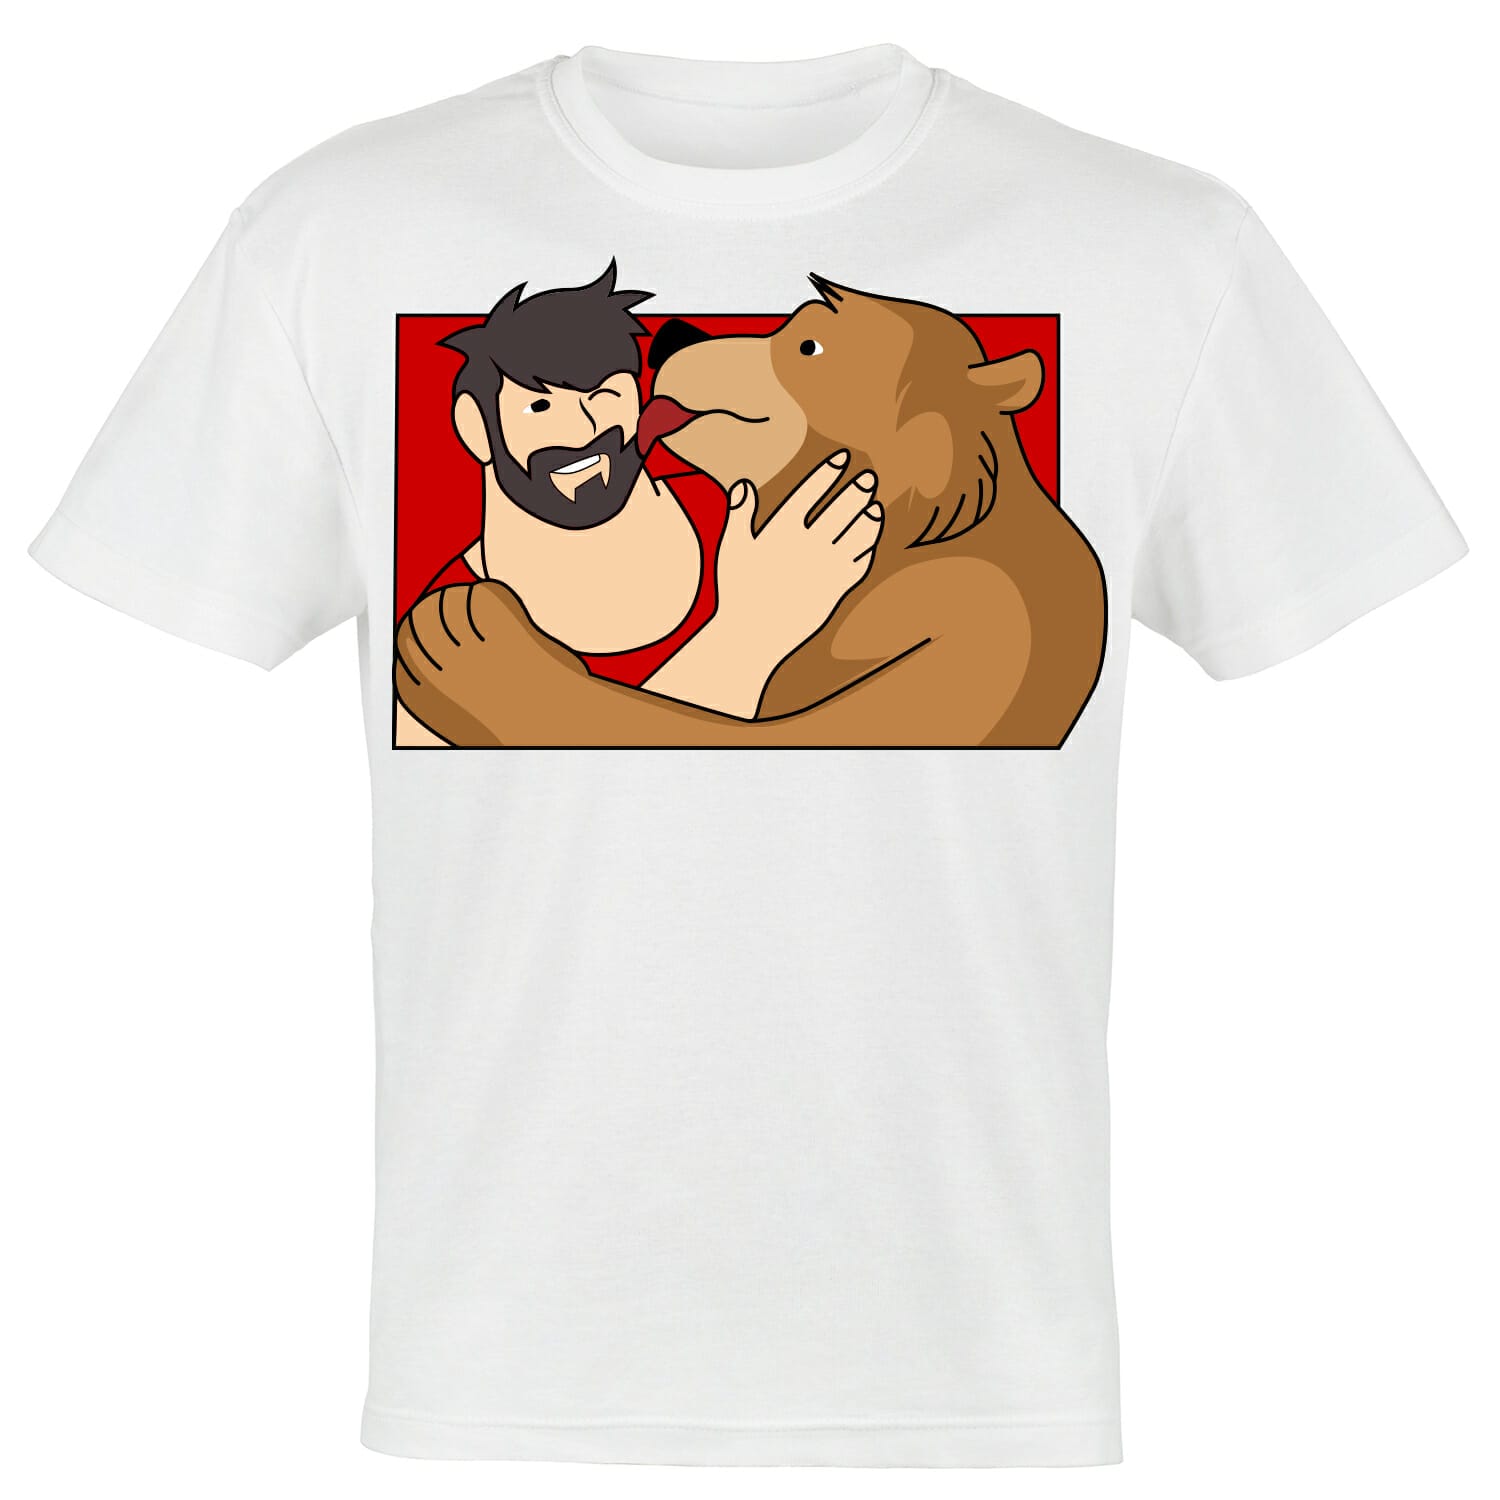 bear licking a man tshirt design